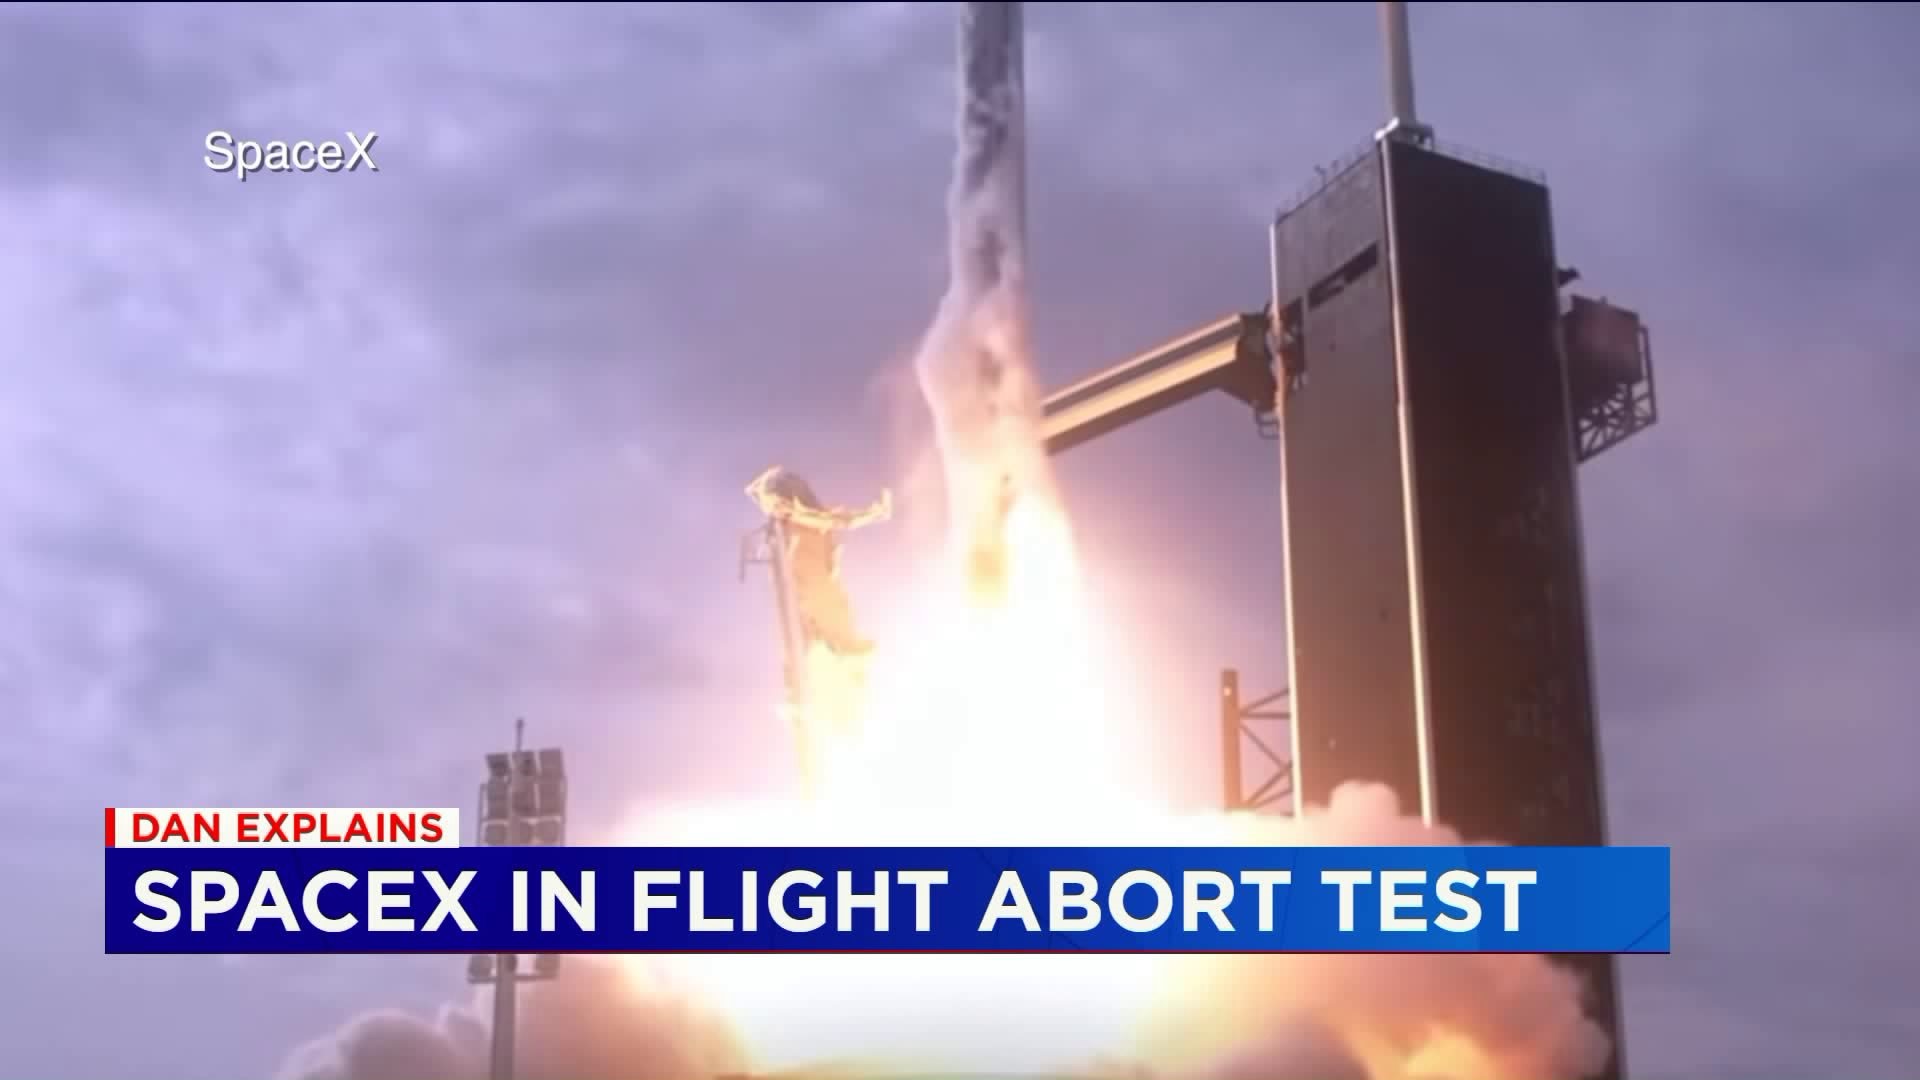 Dan Explains: Spacex in flight abort test